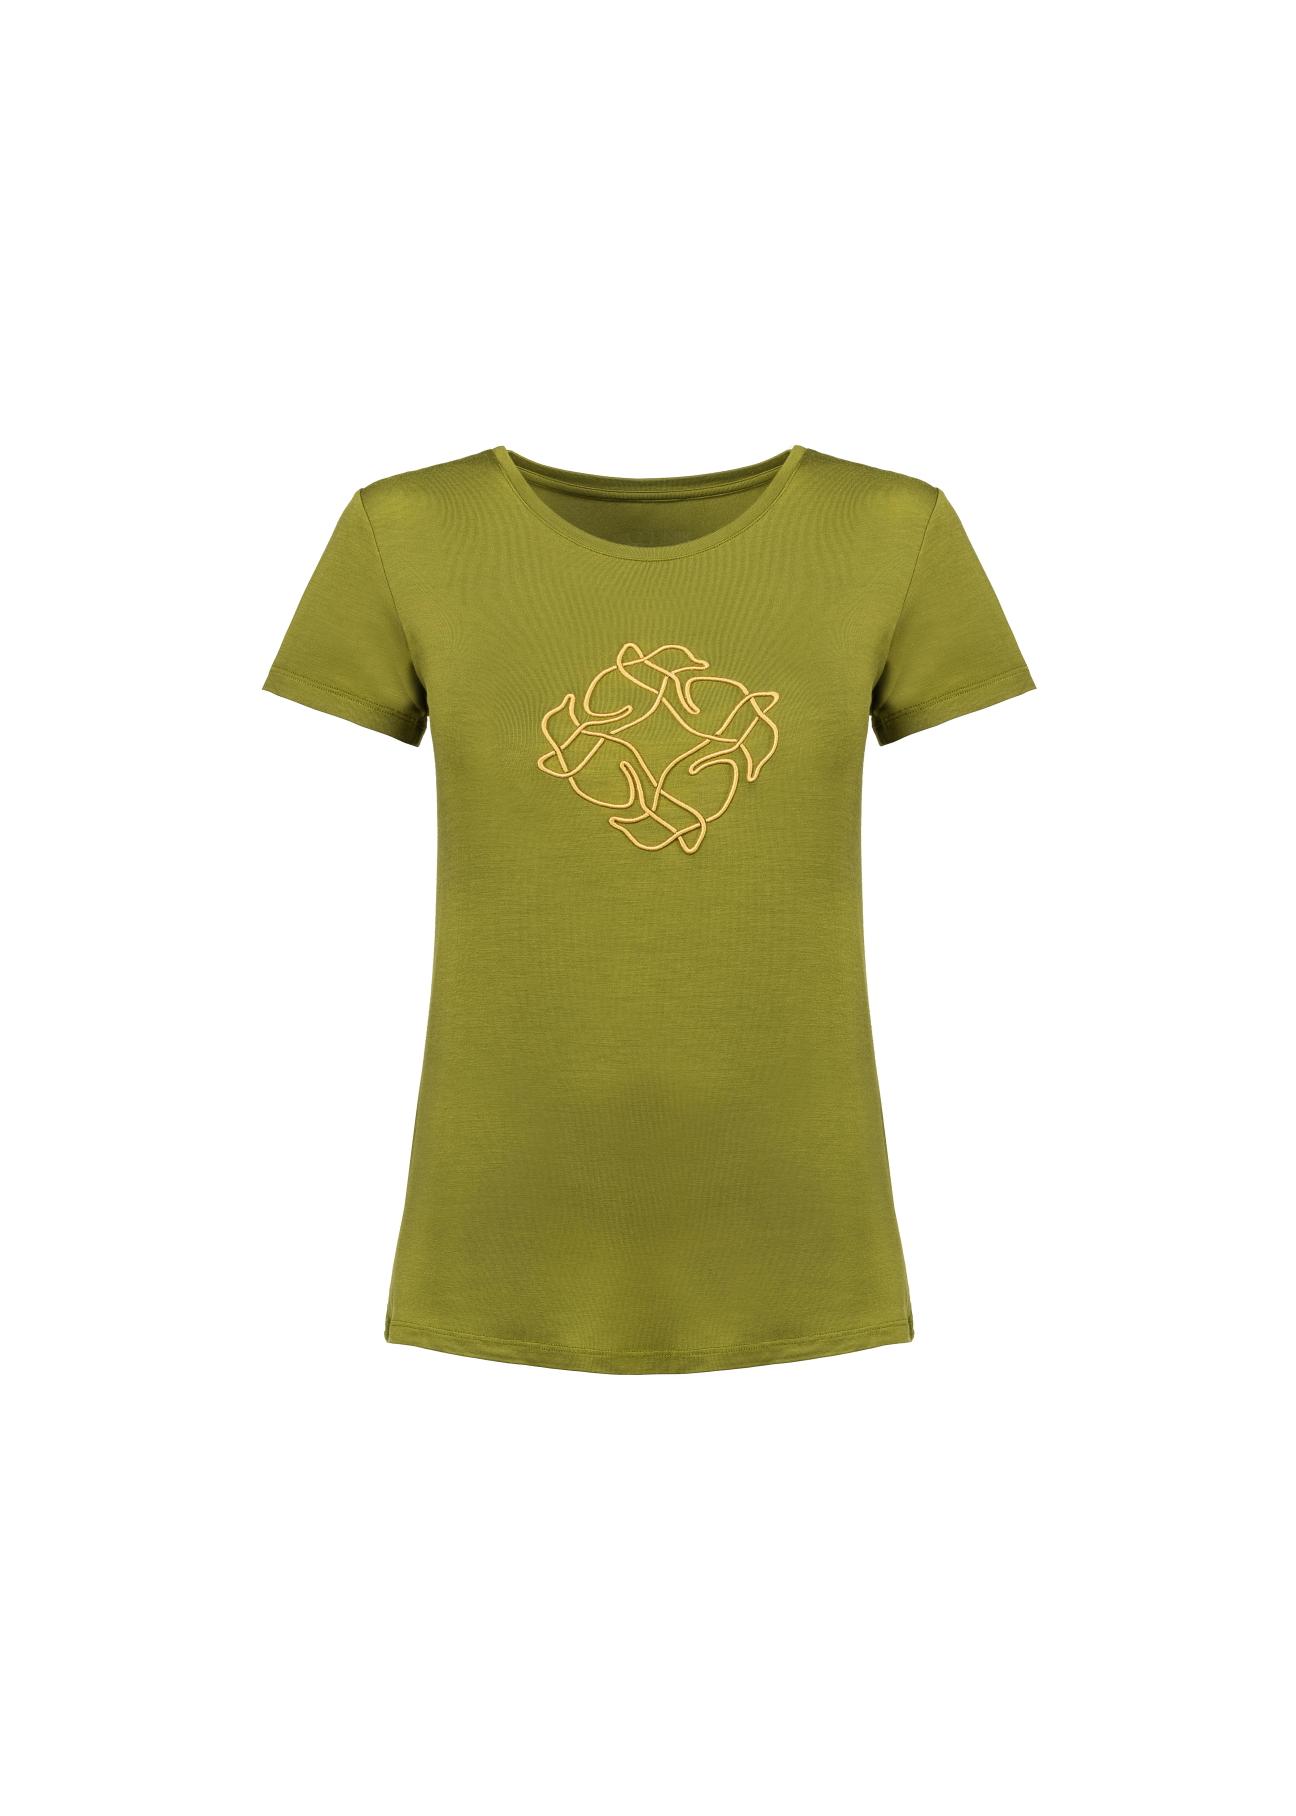 T-shirt damski khaki z wilgą TSHDT-0078-55(Z21)